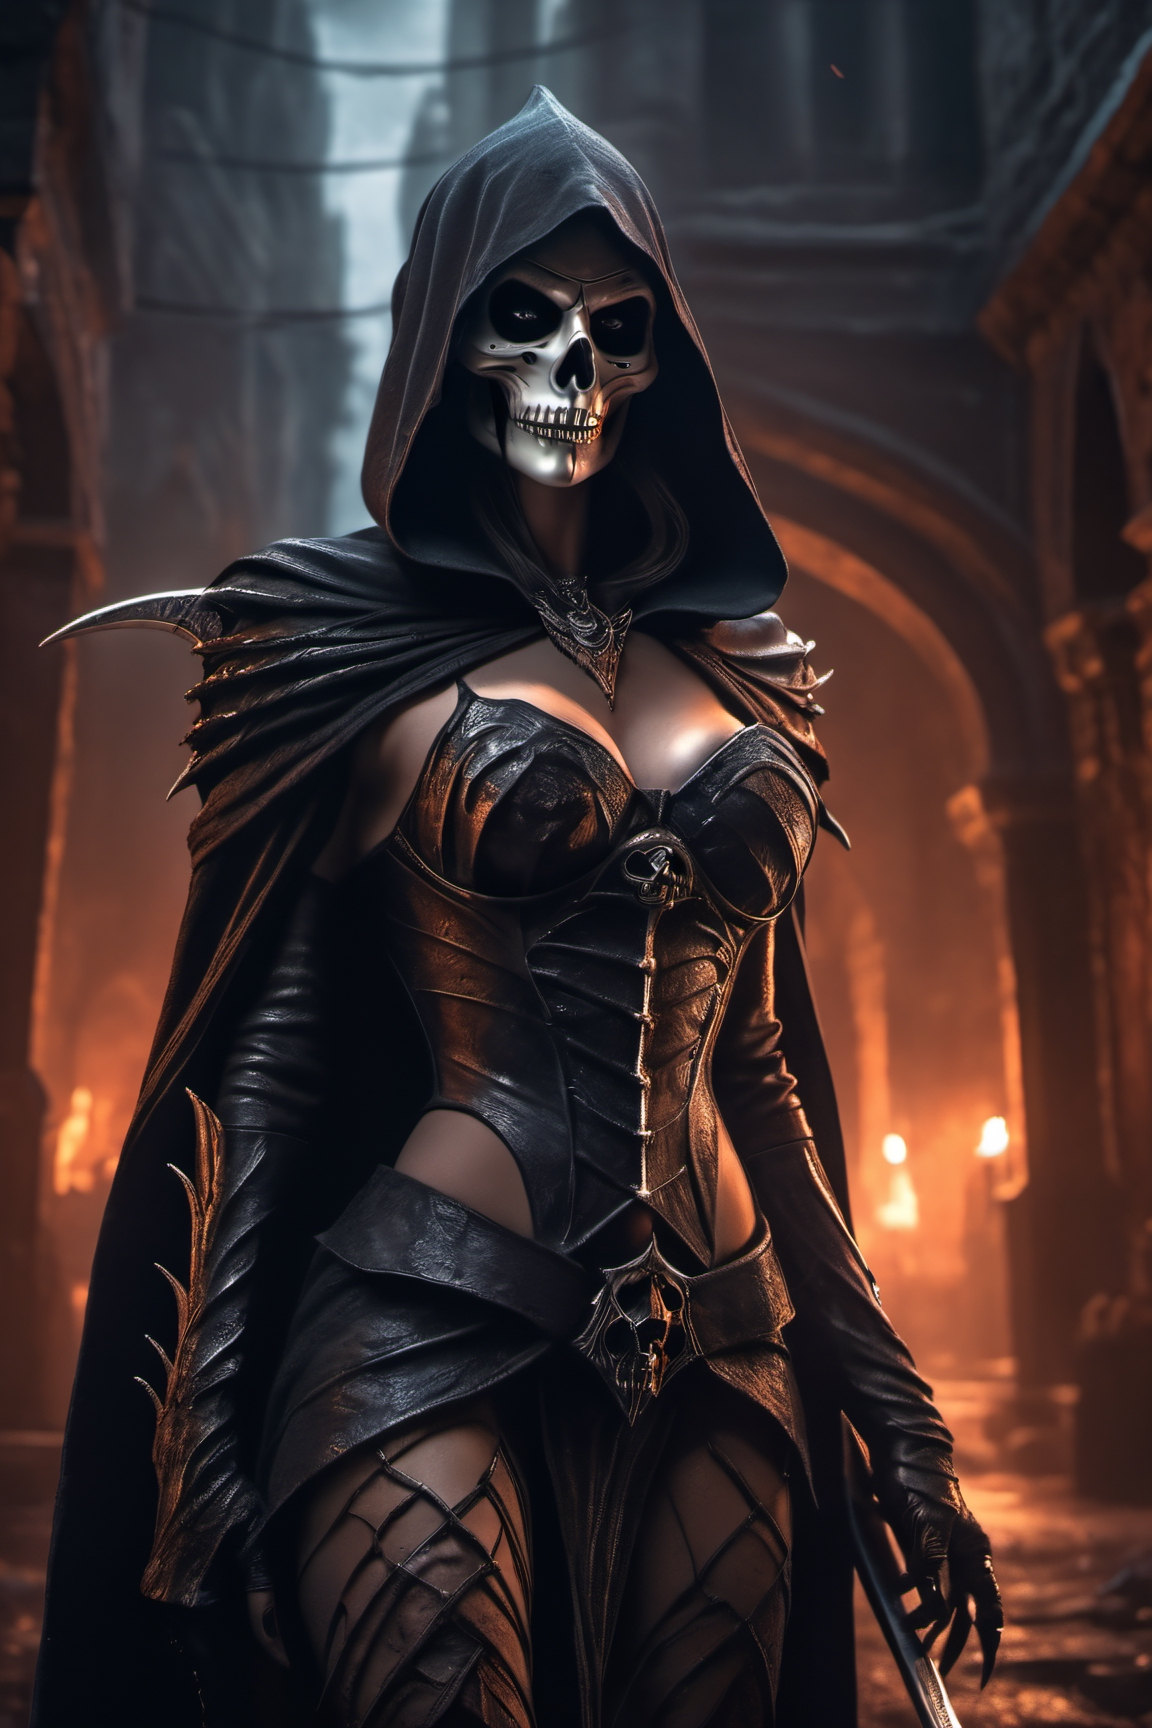 female grim reaper backgrounds